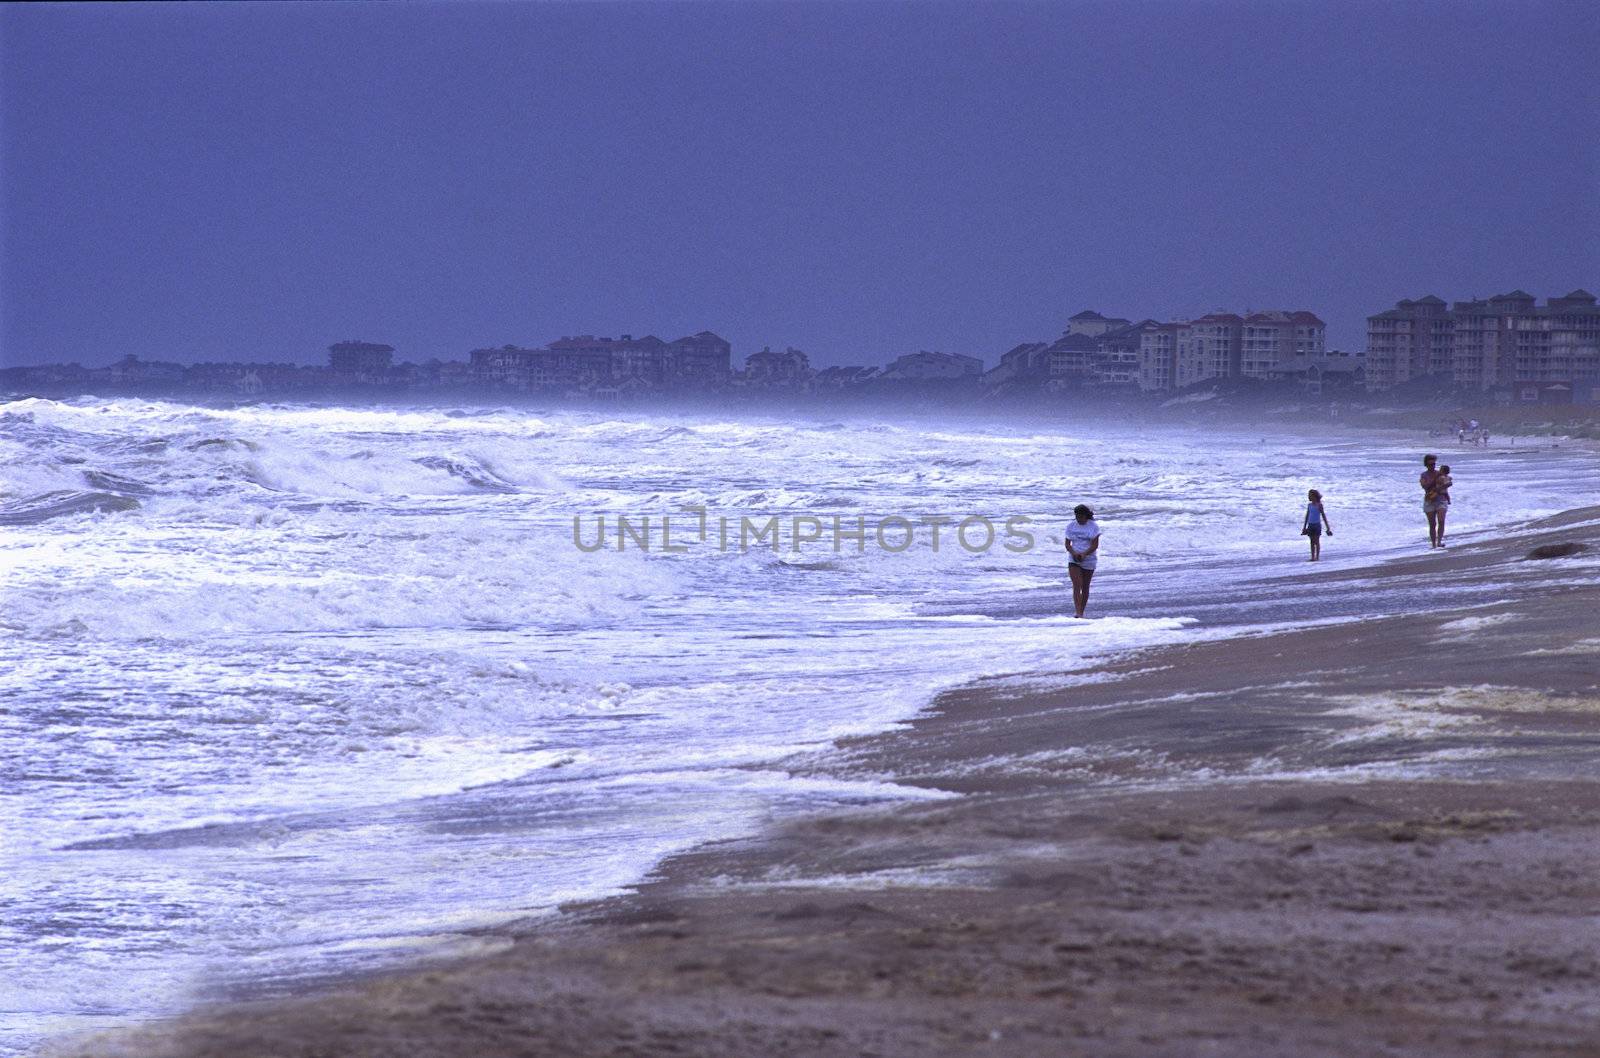 people on beach stormy ocean Amelia Island Florida by hotflash2001